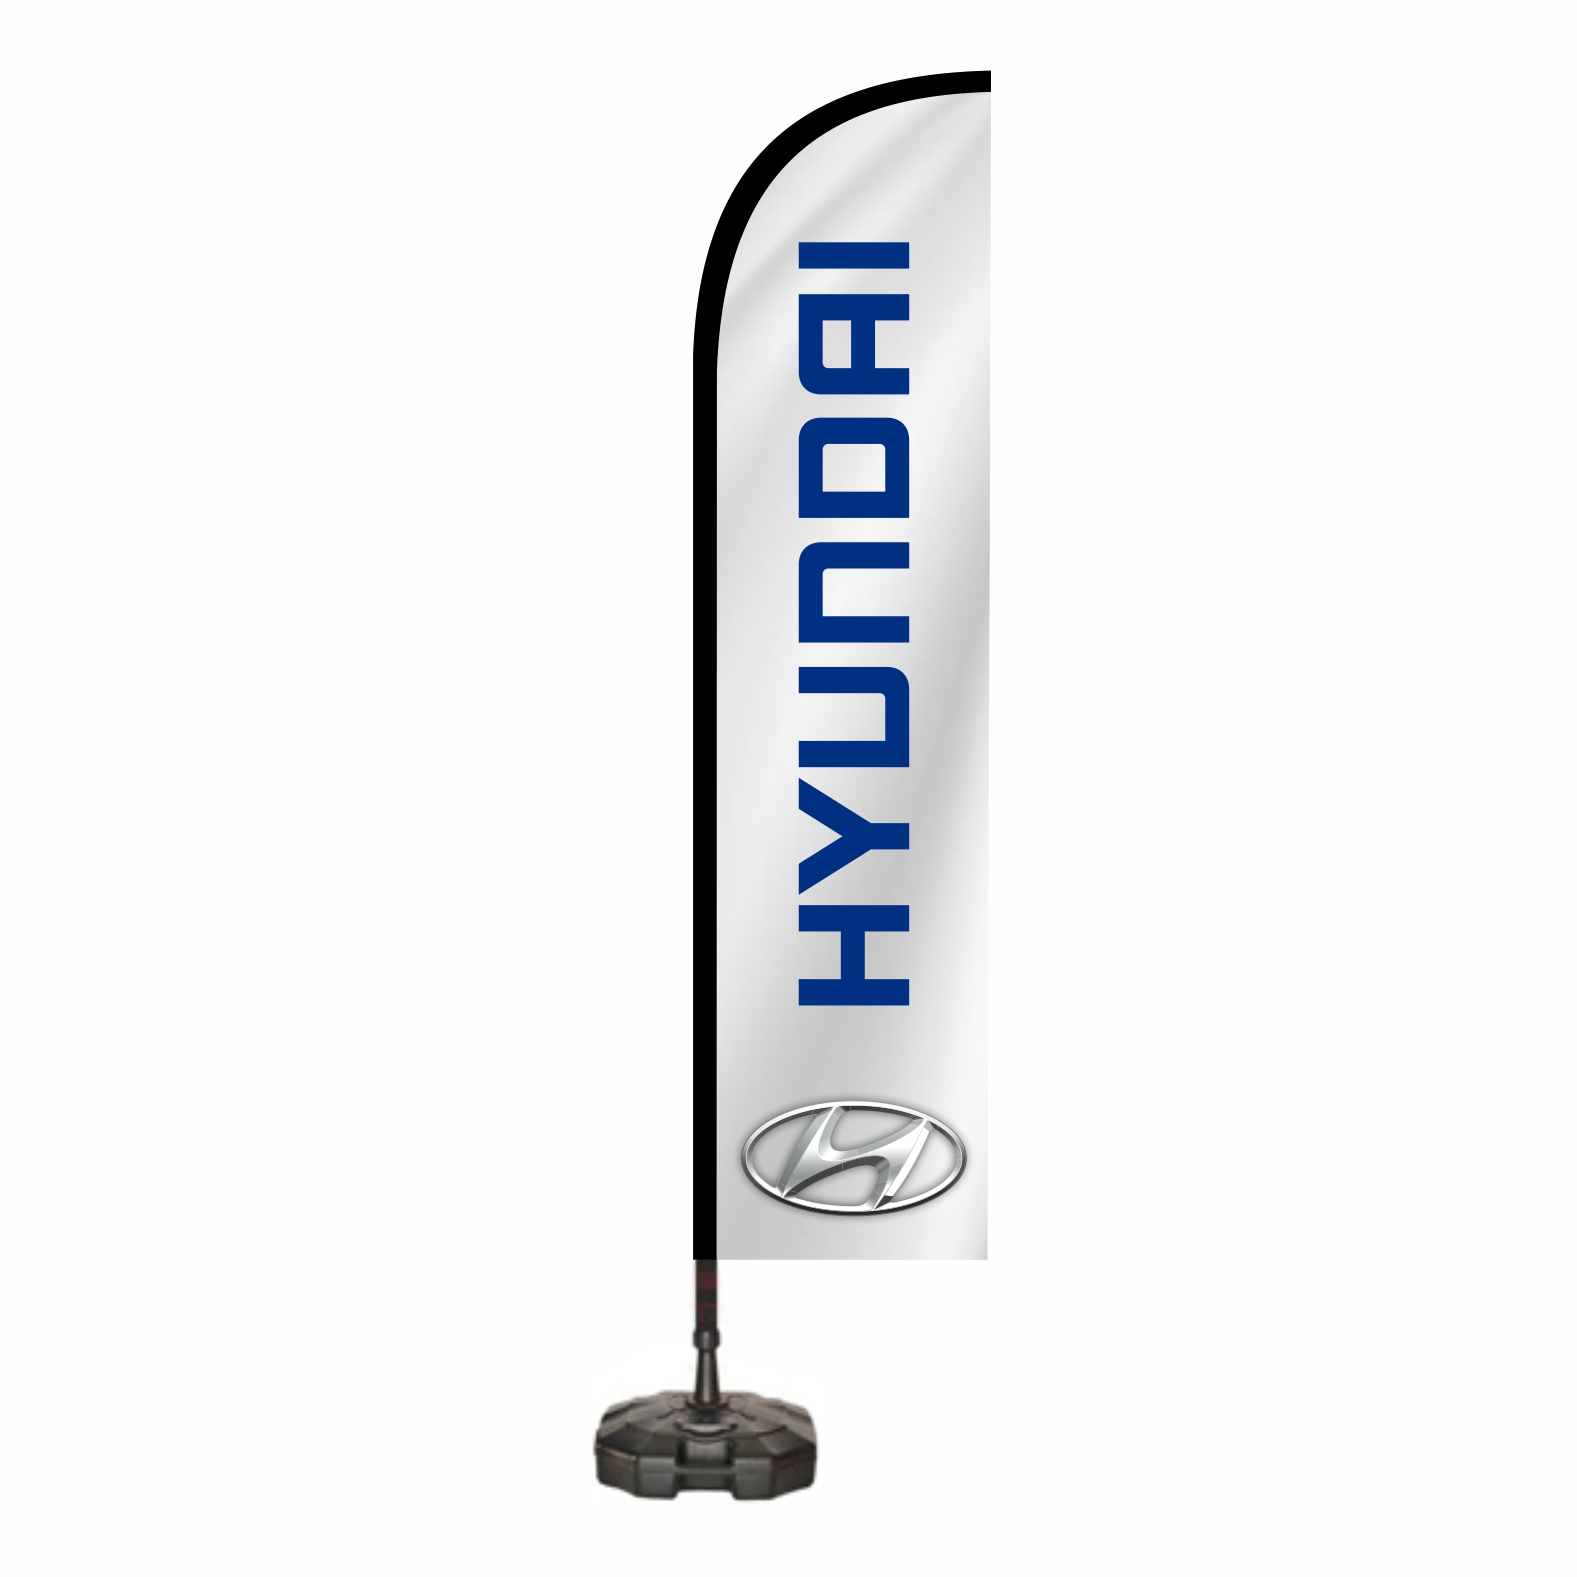 Hyundai Oltal Bayra Yapan Firmalar